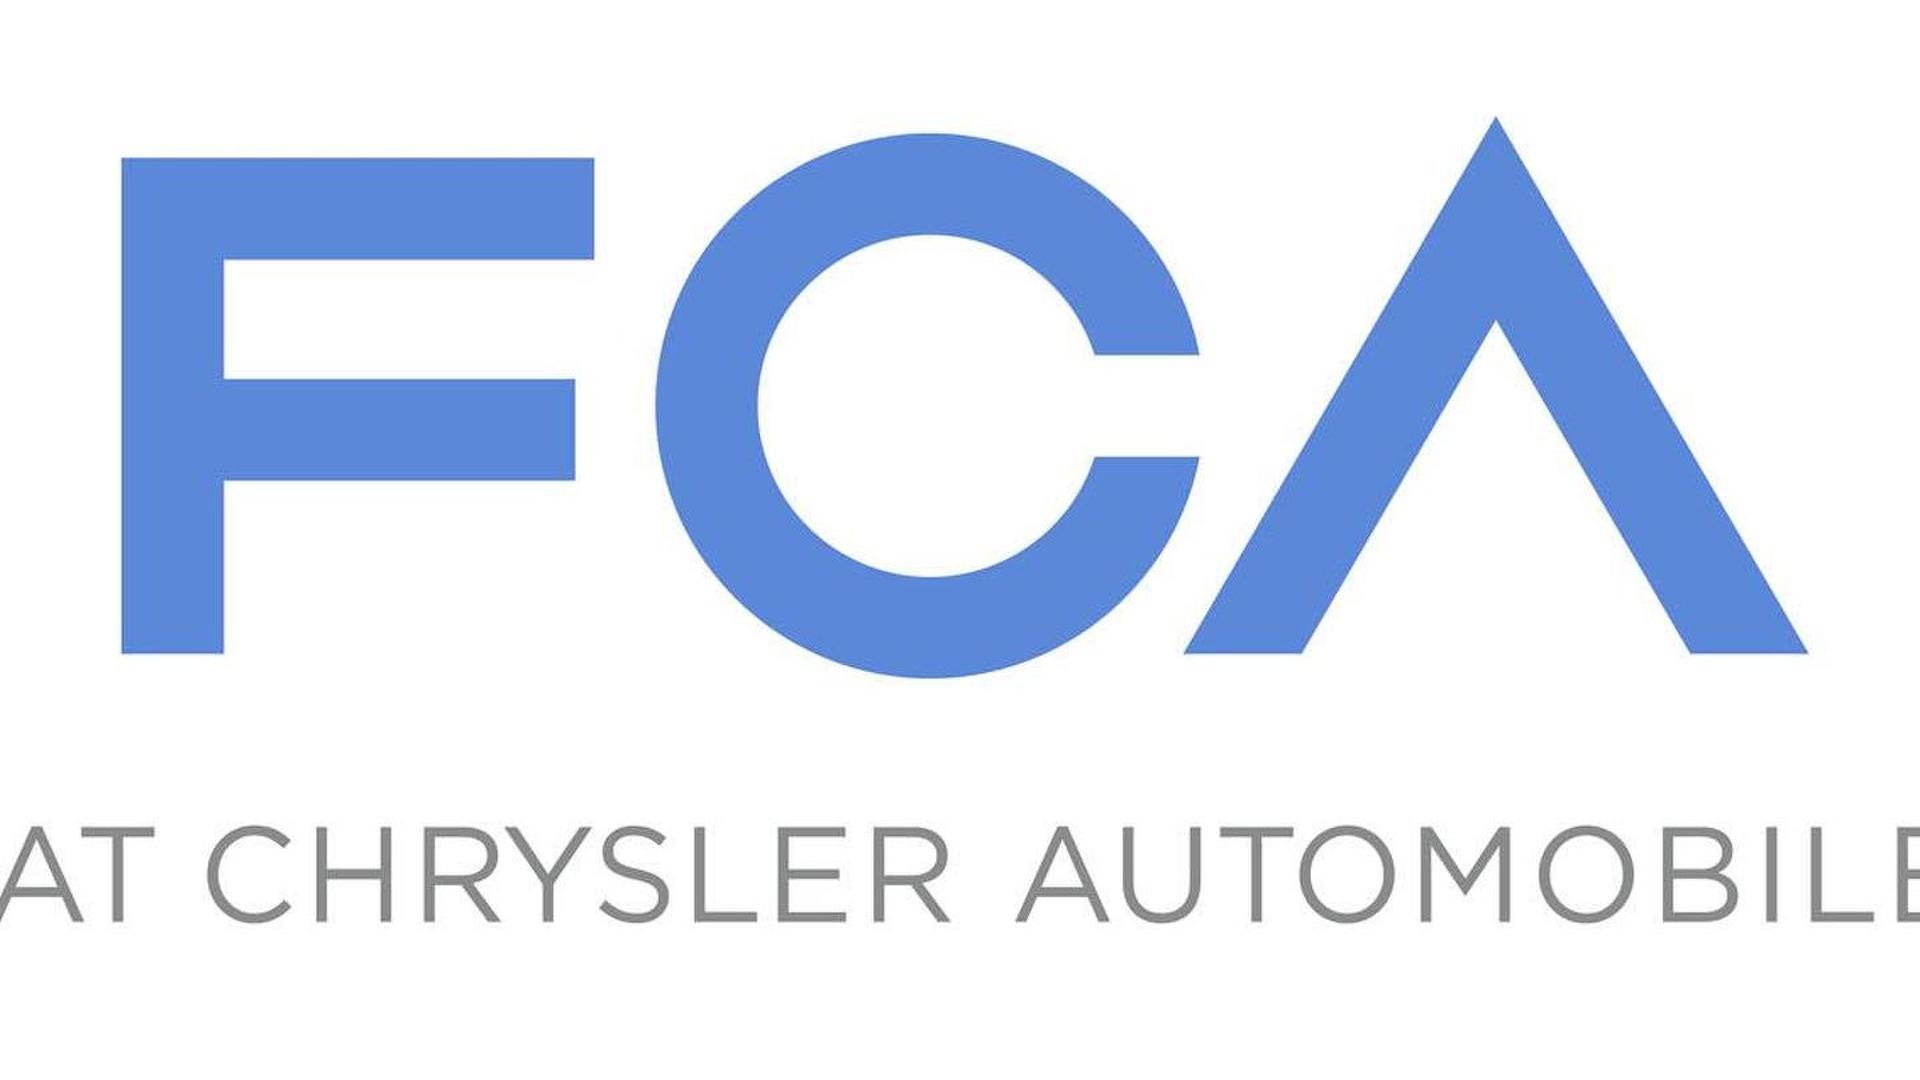 2014-445731-fiat-chrysler-automobiles-fca-logo1.jpg